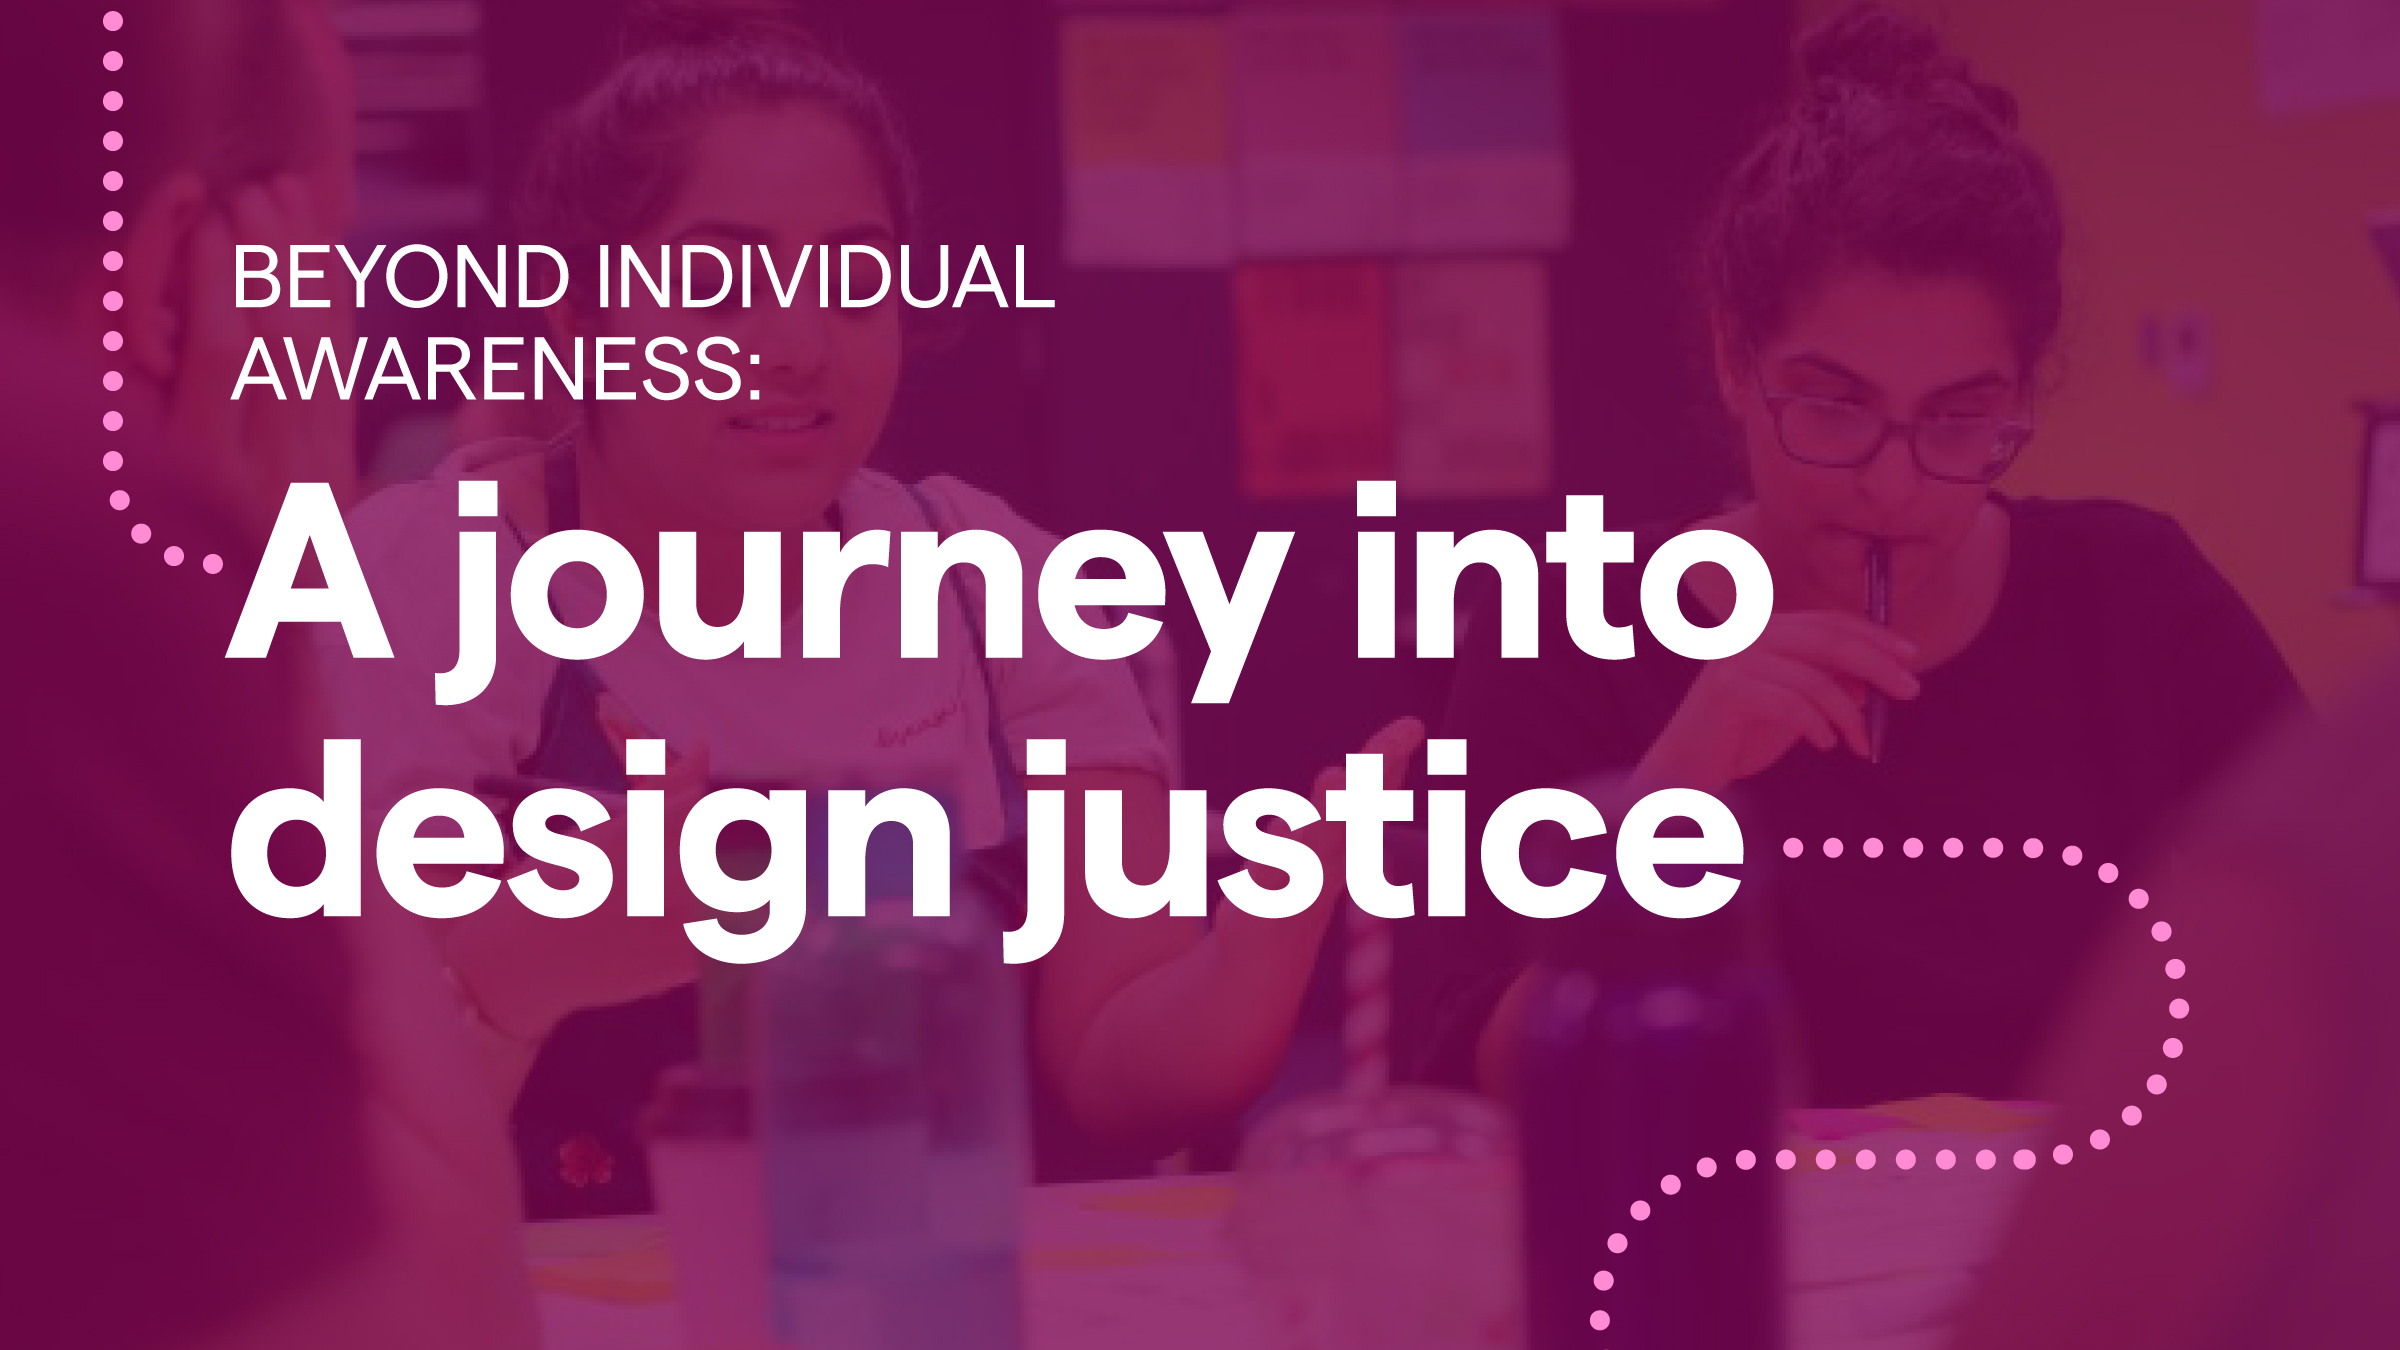 A journey into design justice